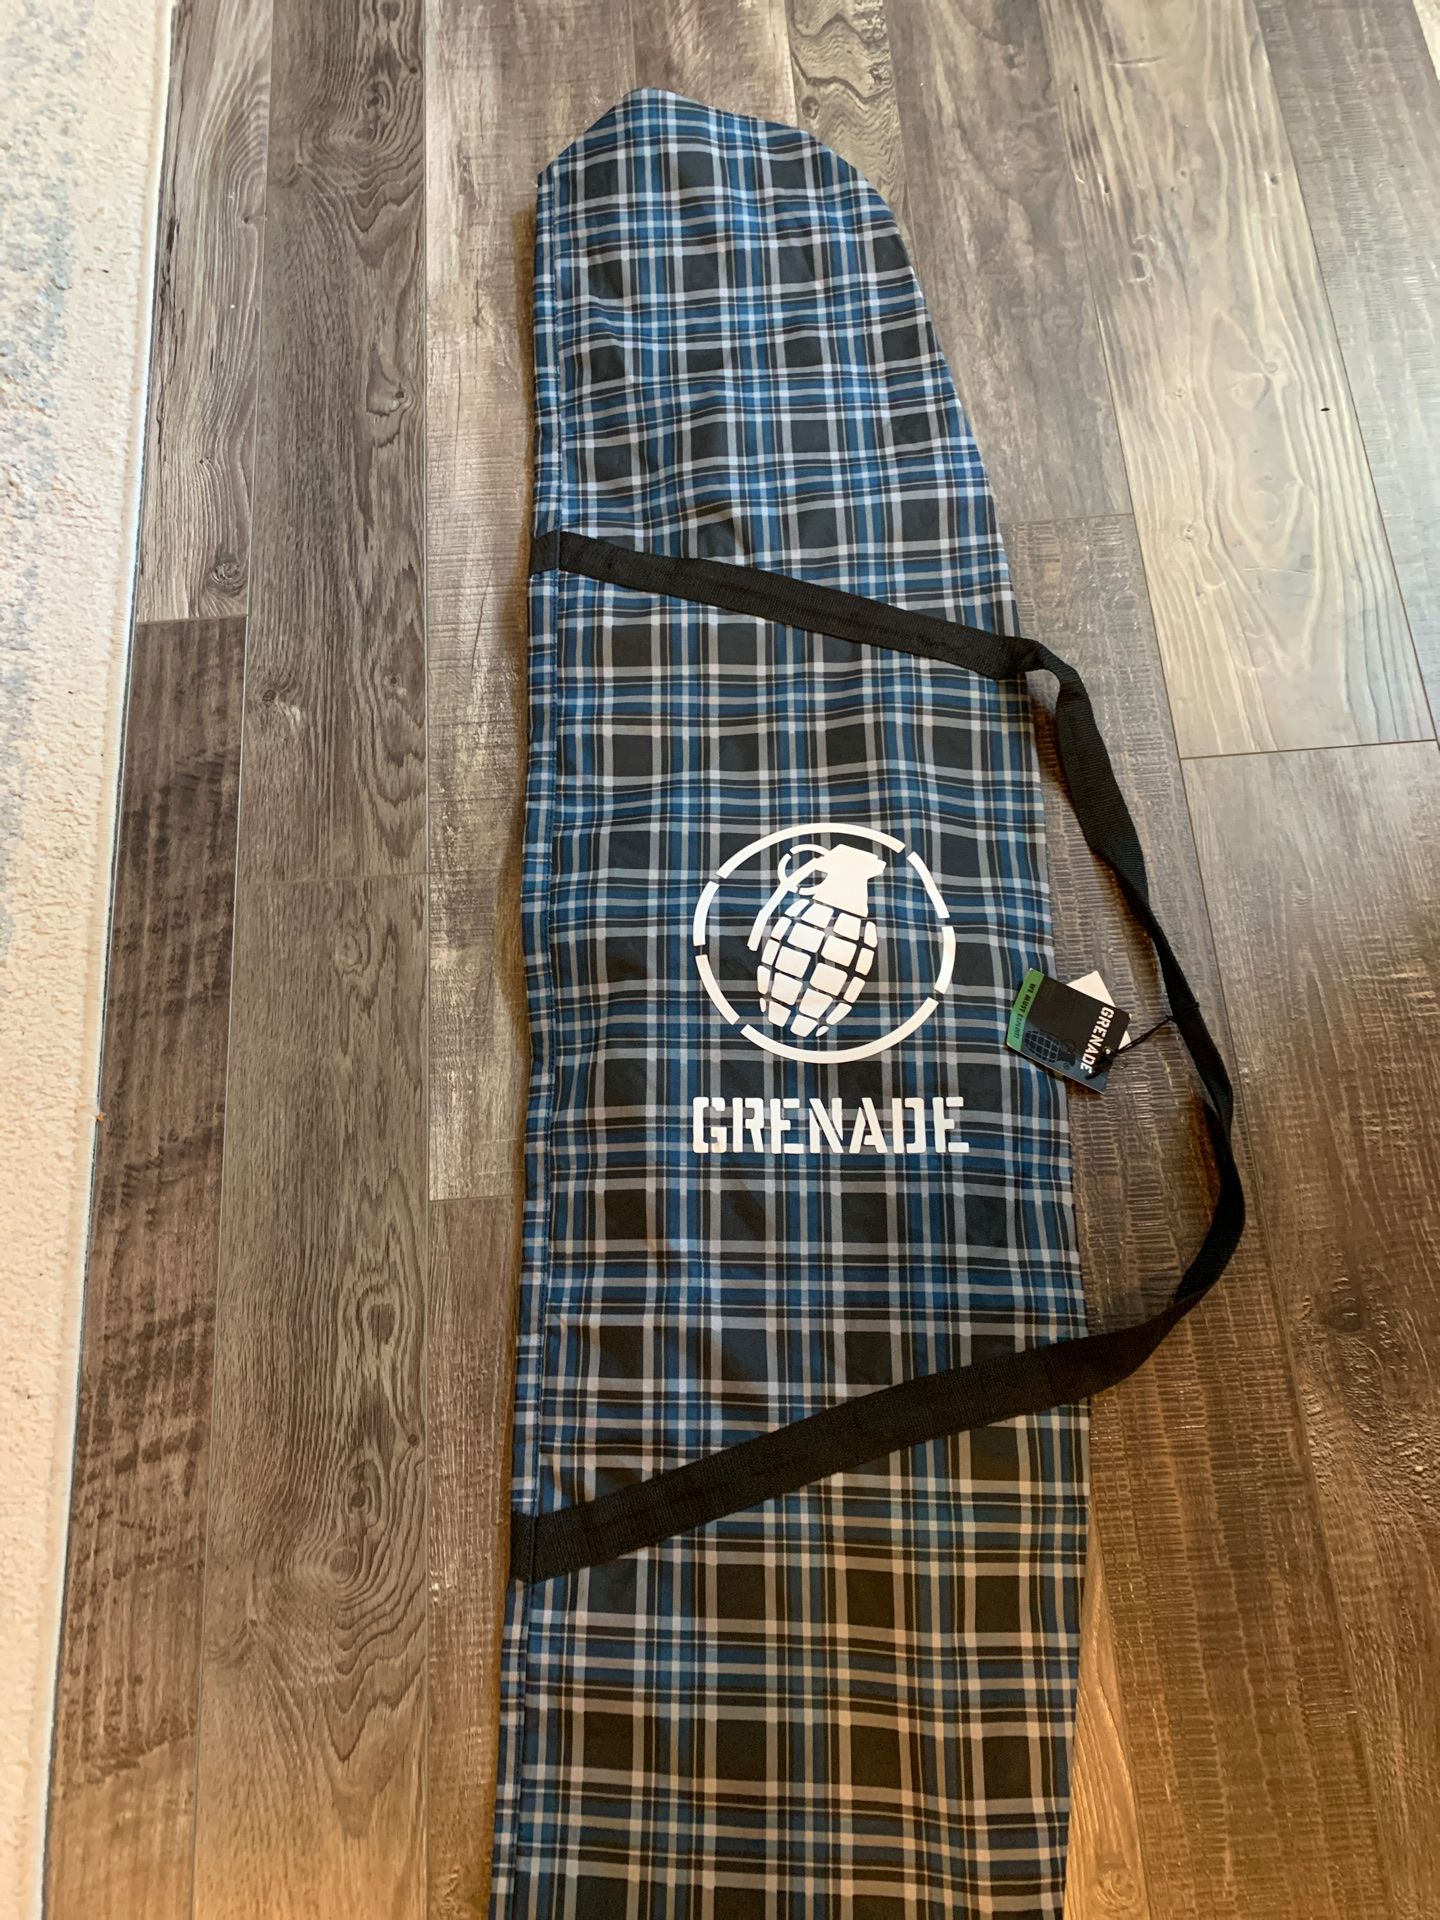 Brand new GRENADE Snowboard bag!